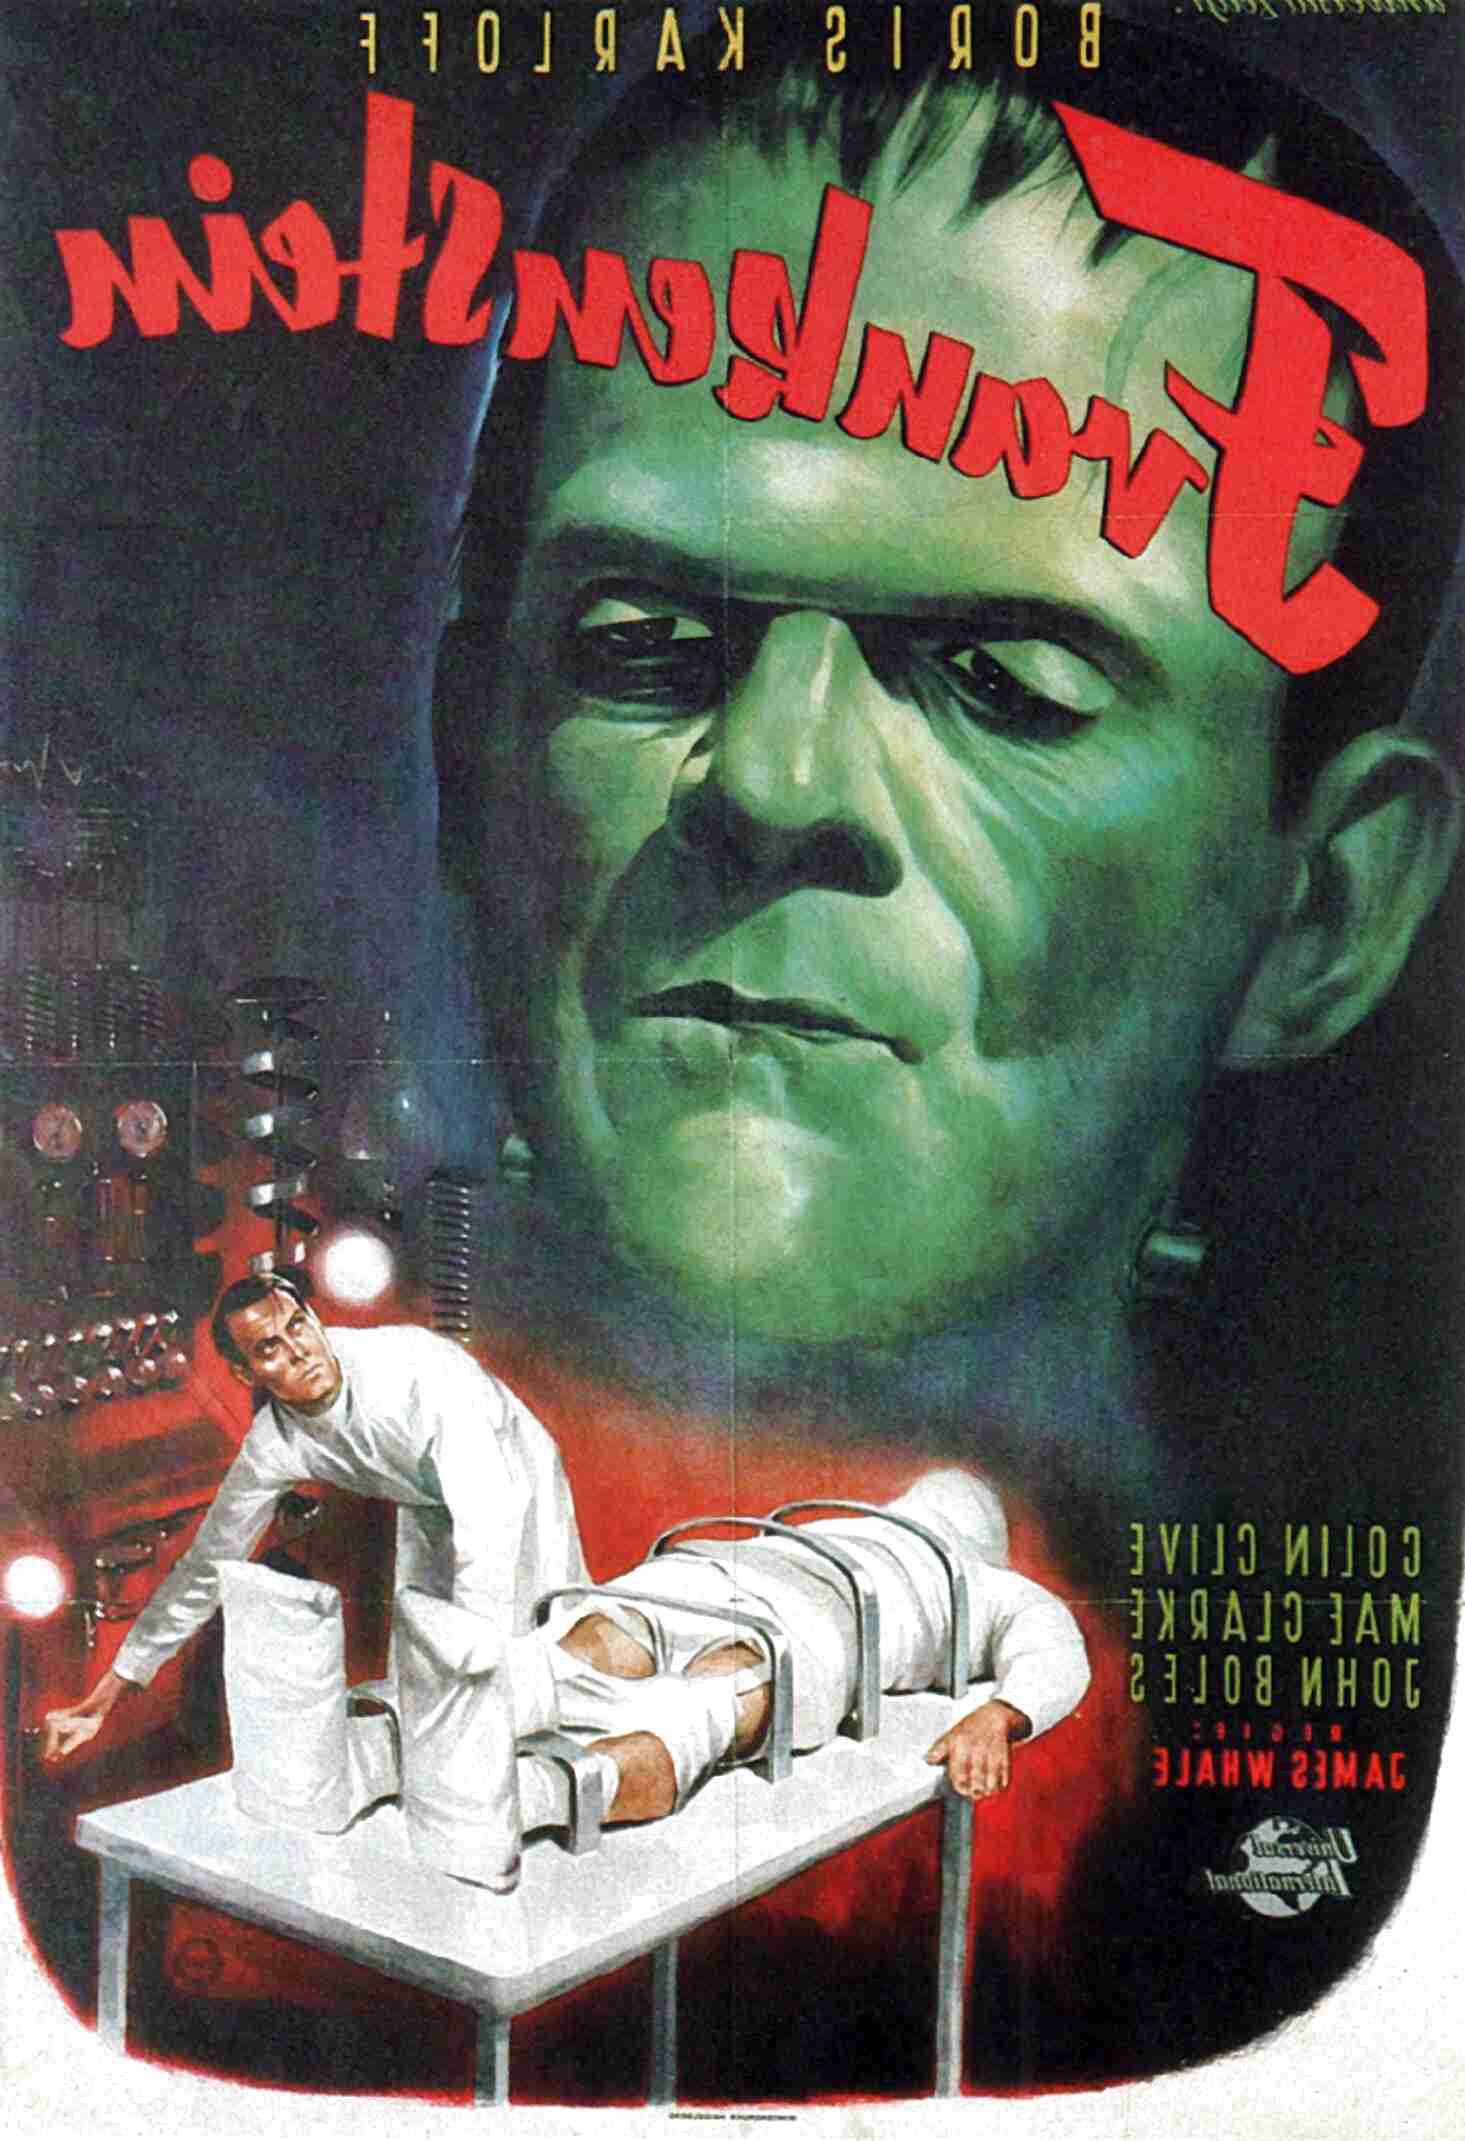 Frankenstein Poster for sale in UK | View 21 bargains